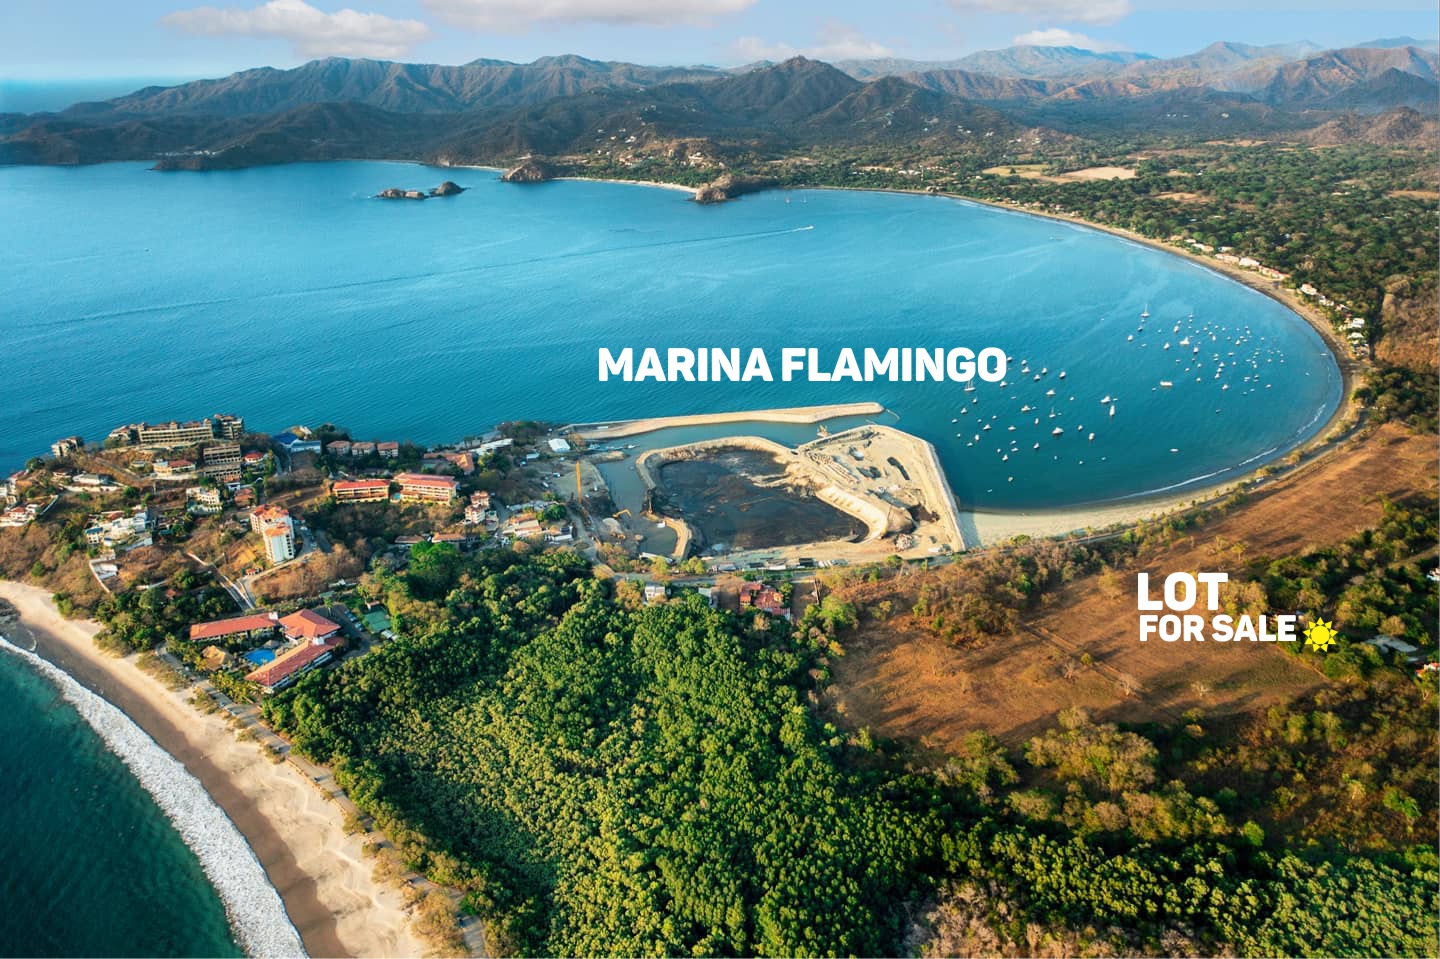 Property for sale close Marina Flamingo Guanacaste Costa Rica